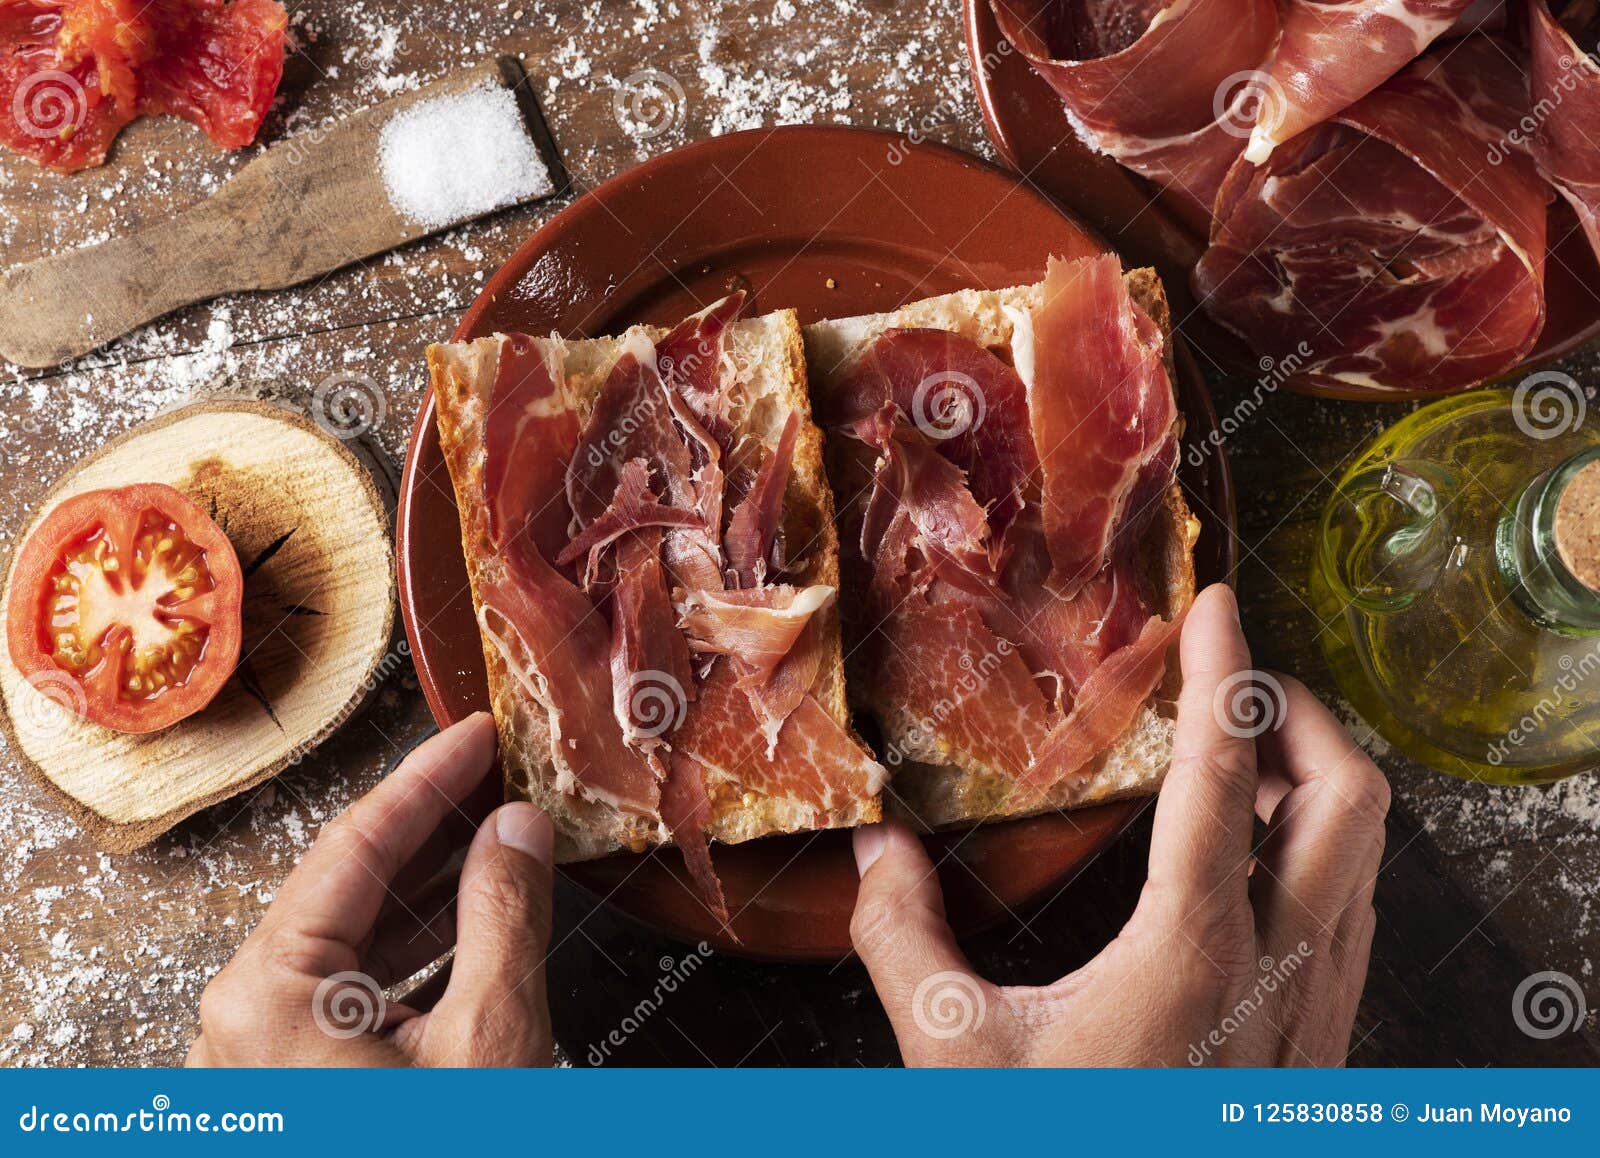 spanish bocadillo de jamon, serrano ham sandwich